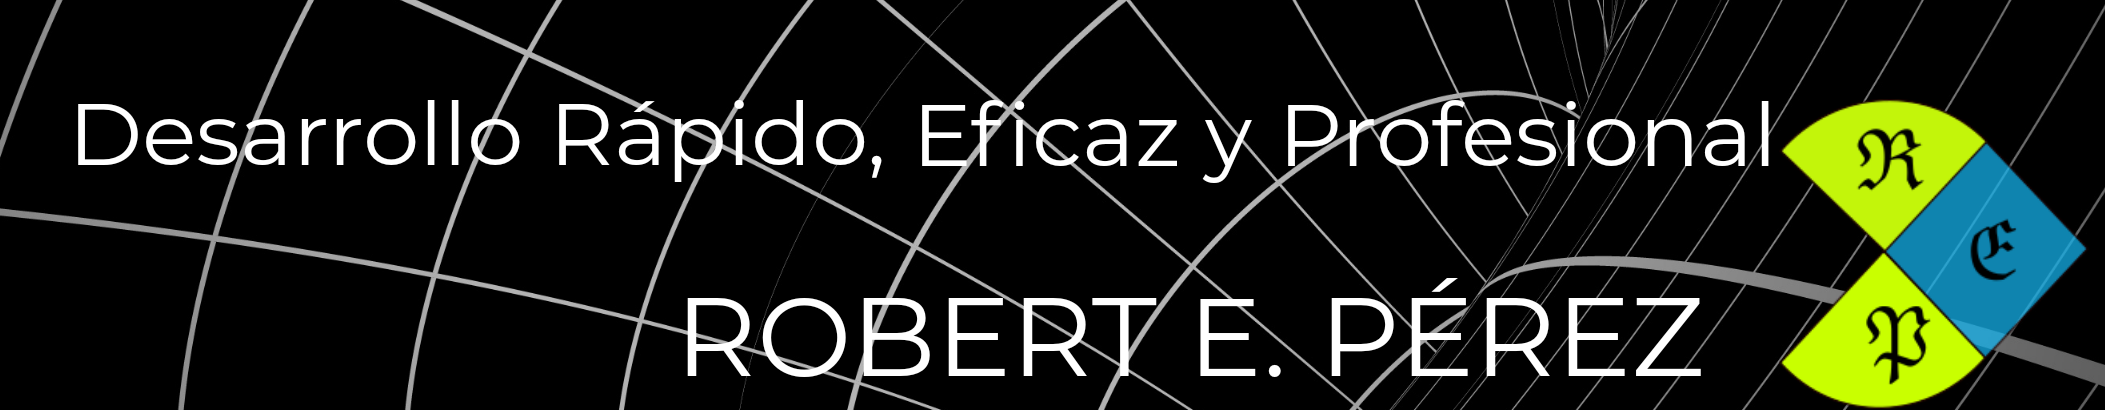 Robert E Pérez's profile banner